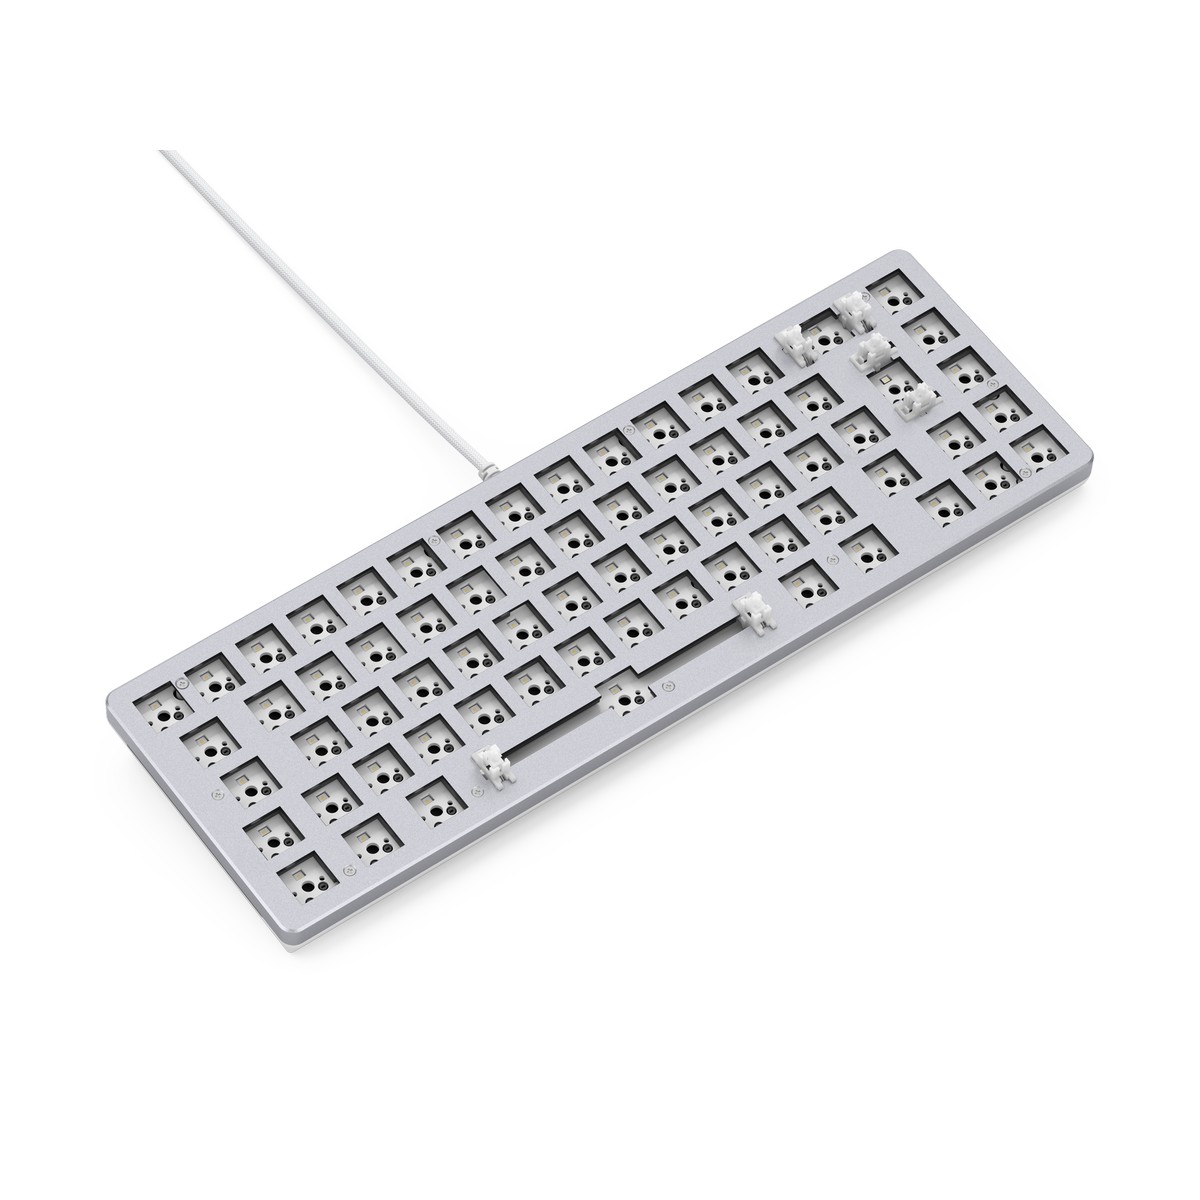 Glorious GMMK 2 65% Keyboard Barebone ISO-Layout - White